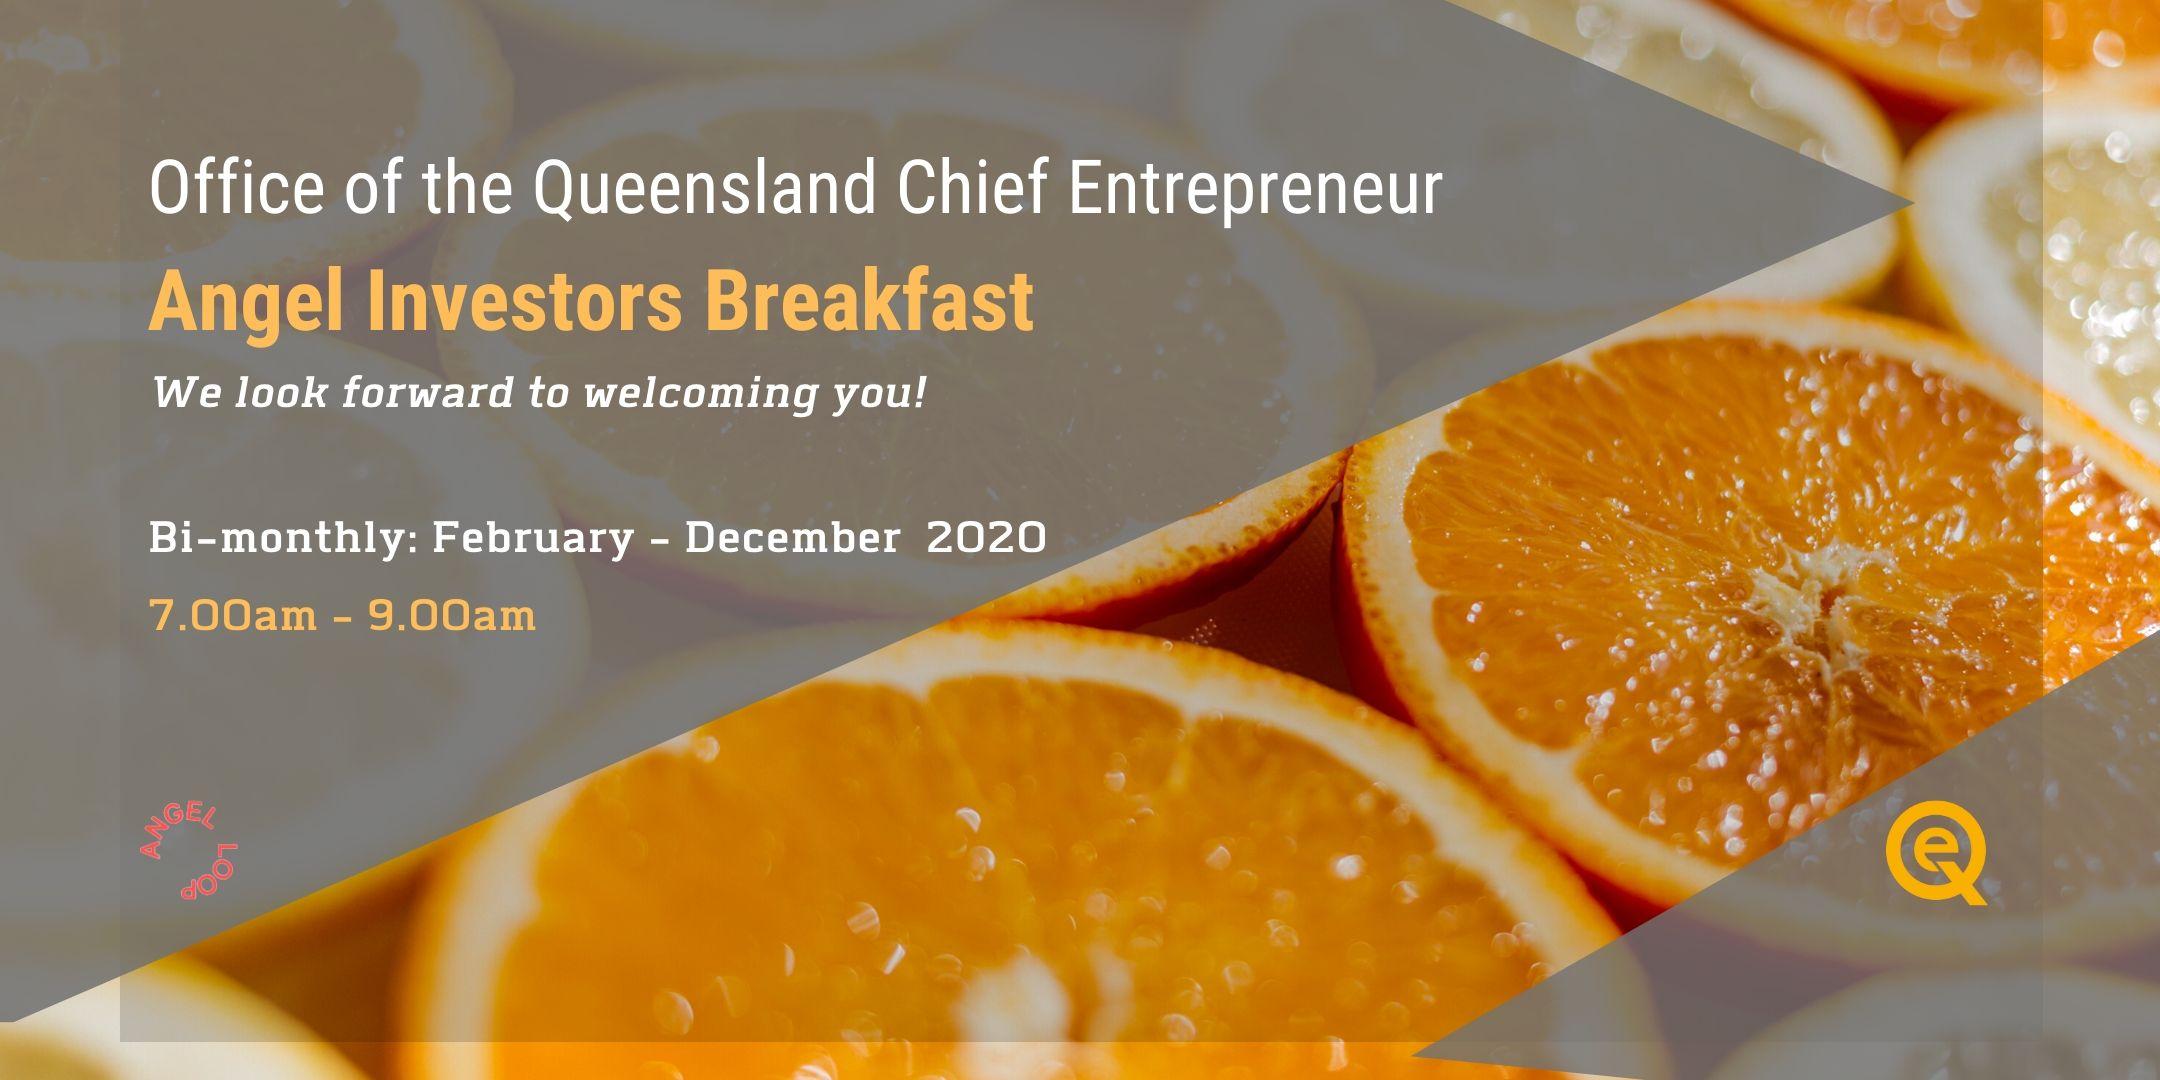 Office of the Queensland Chief Entrepreneur - Angel Investors Breakfast